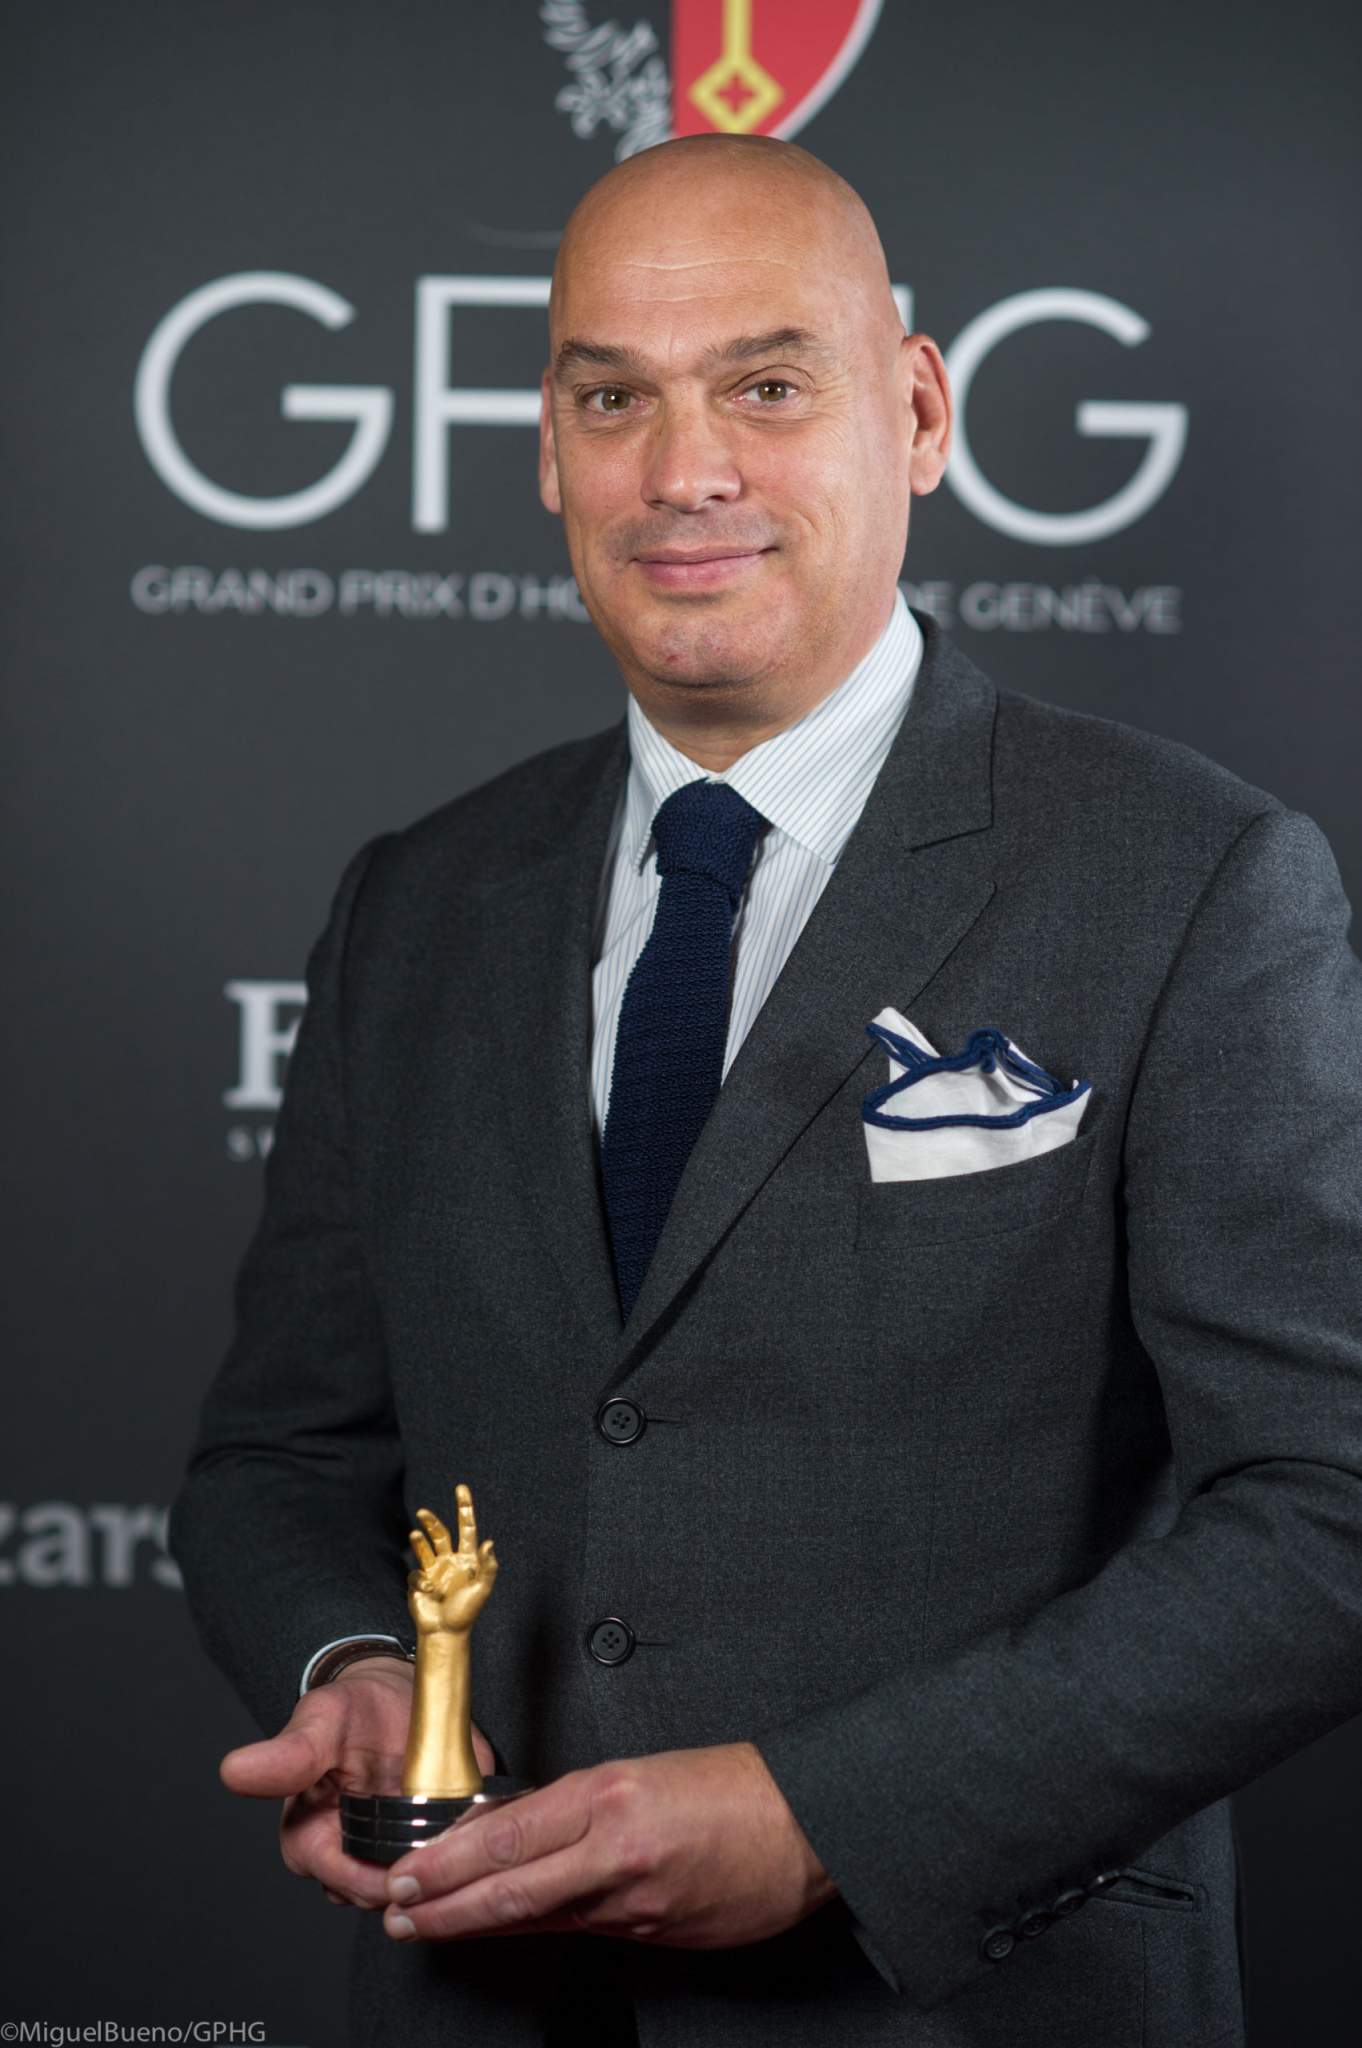 Frédéric Bondoux, President of Grand Seiko Europe, winner of the Men’s Watch Prize 2021